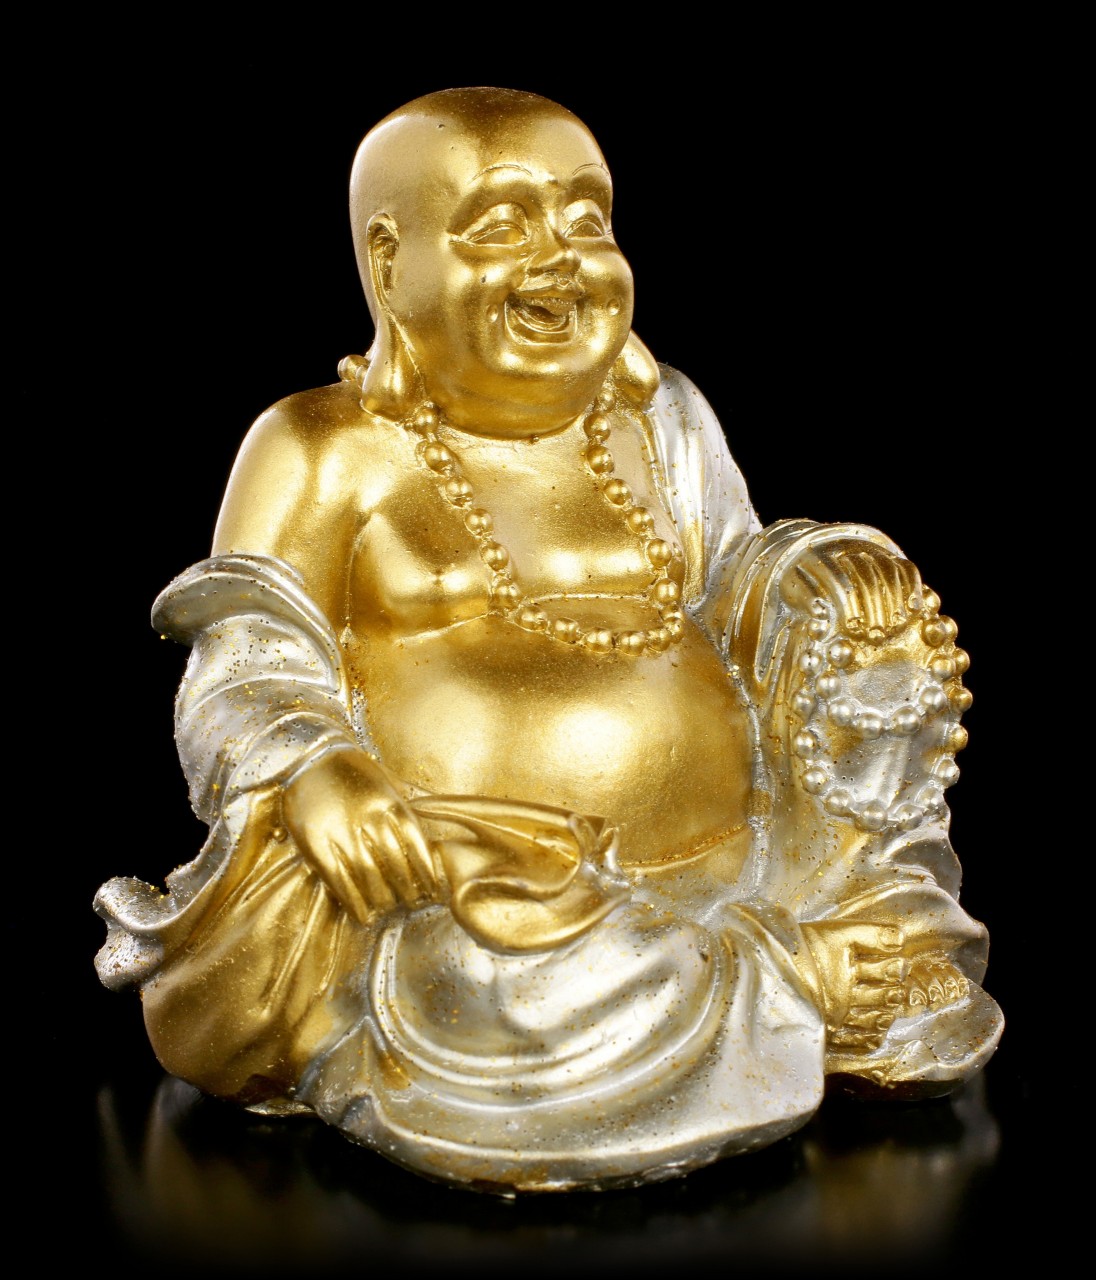 Small Buddha Money Bank - Wealth